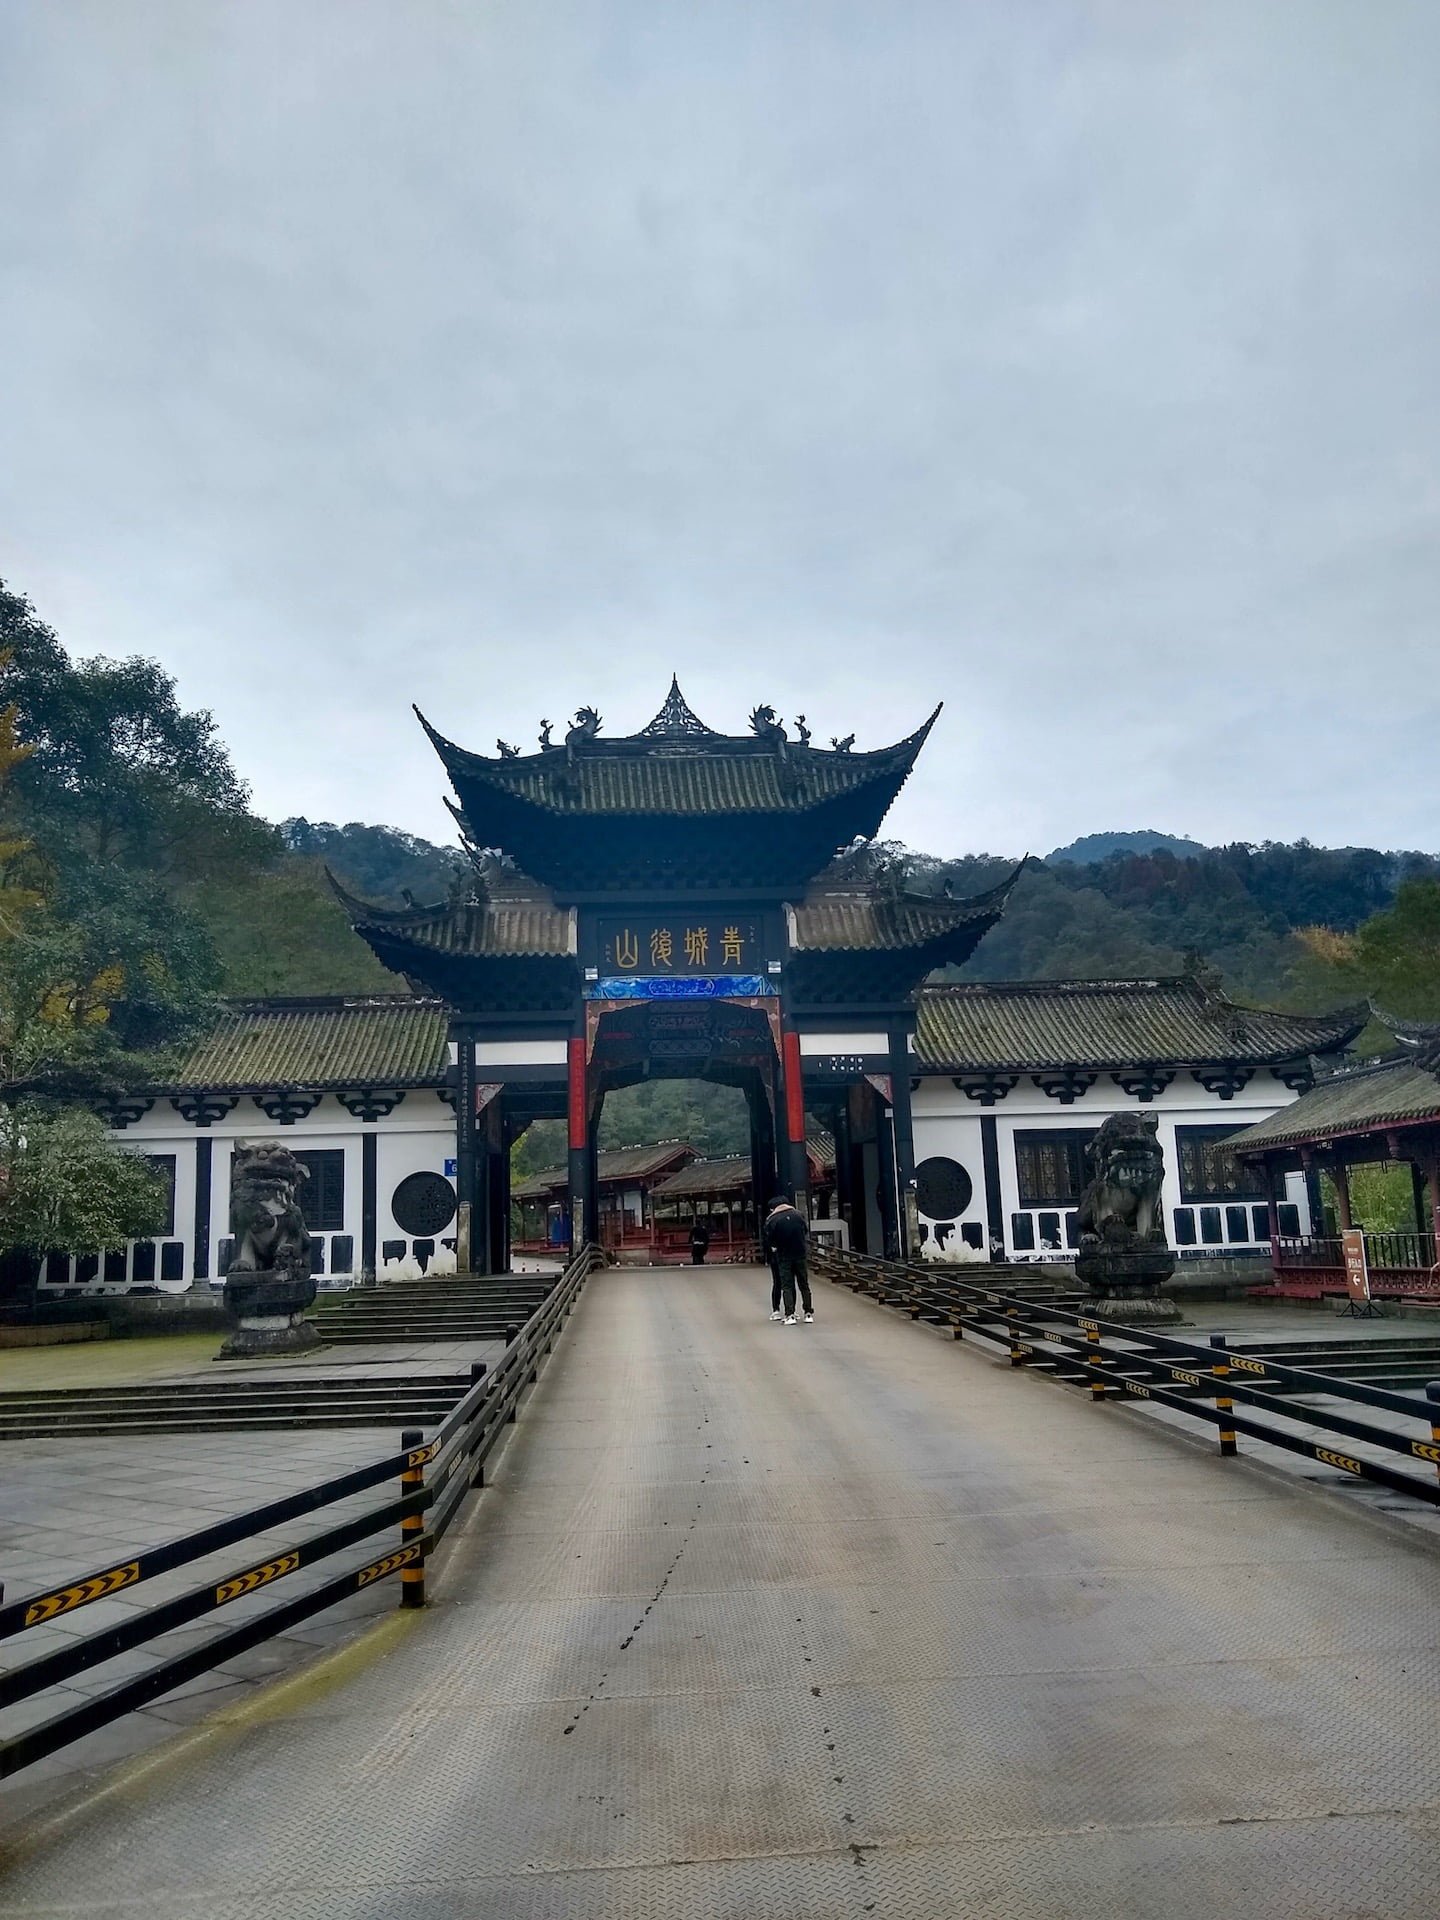 The main entrance to hiking Mount QIngcheng back mountain, located near Chengdu, China